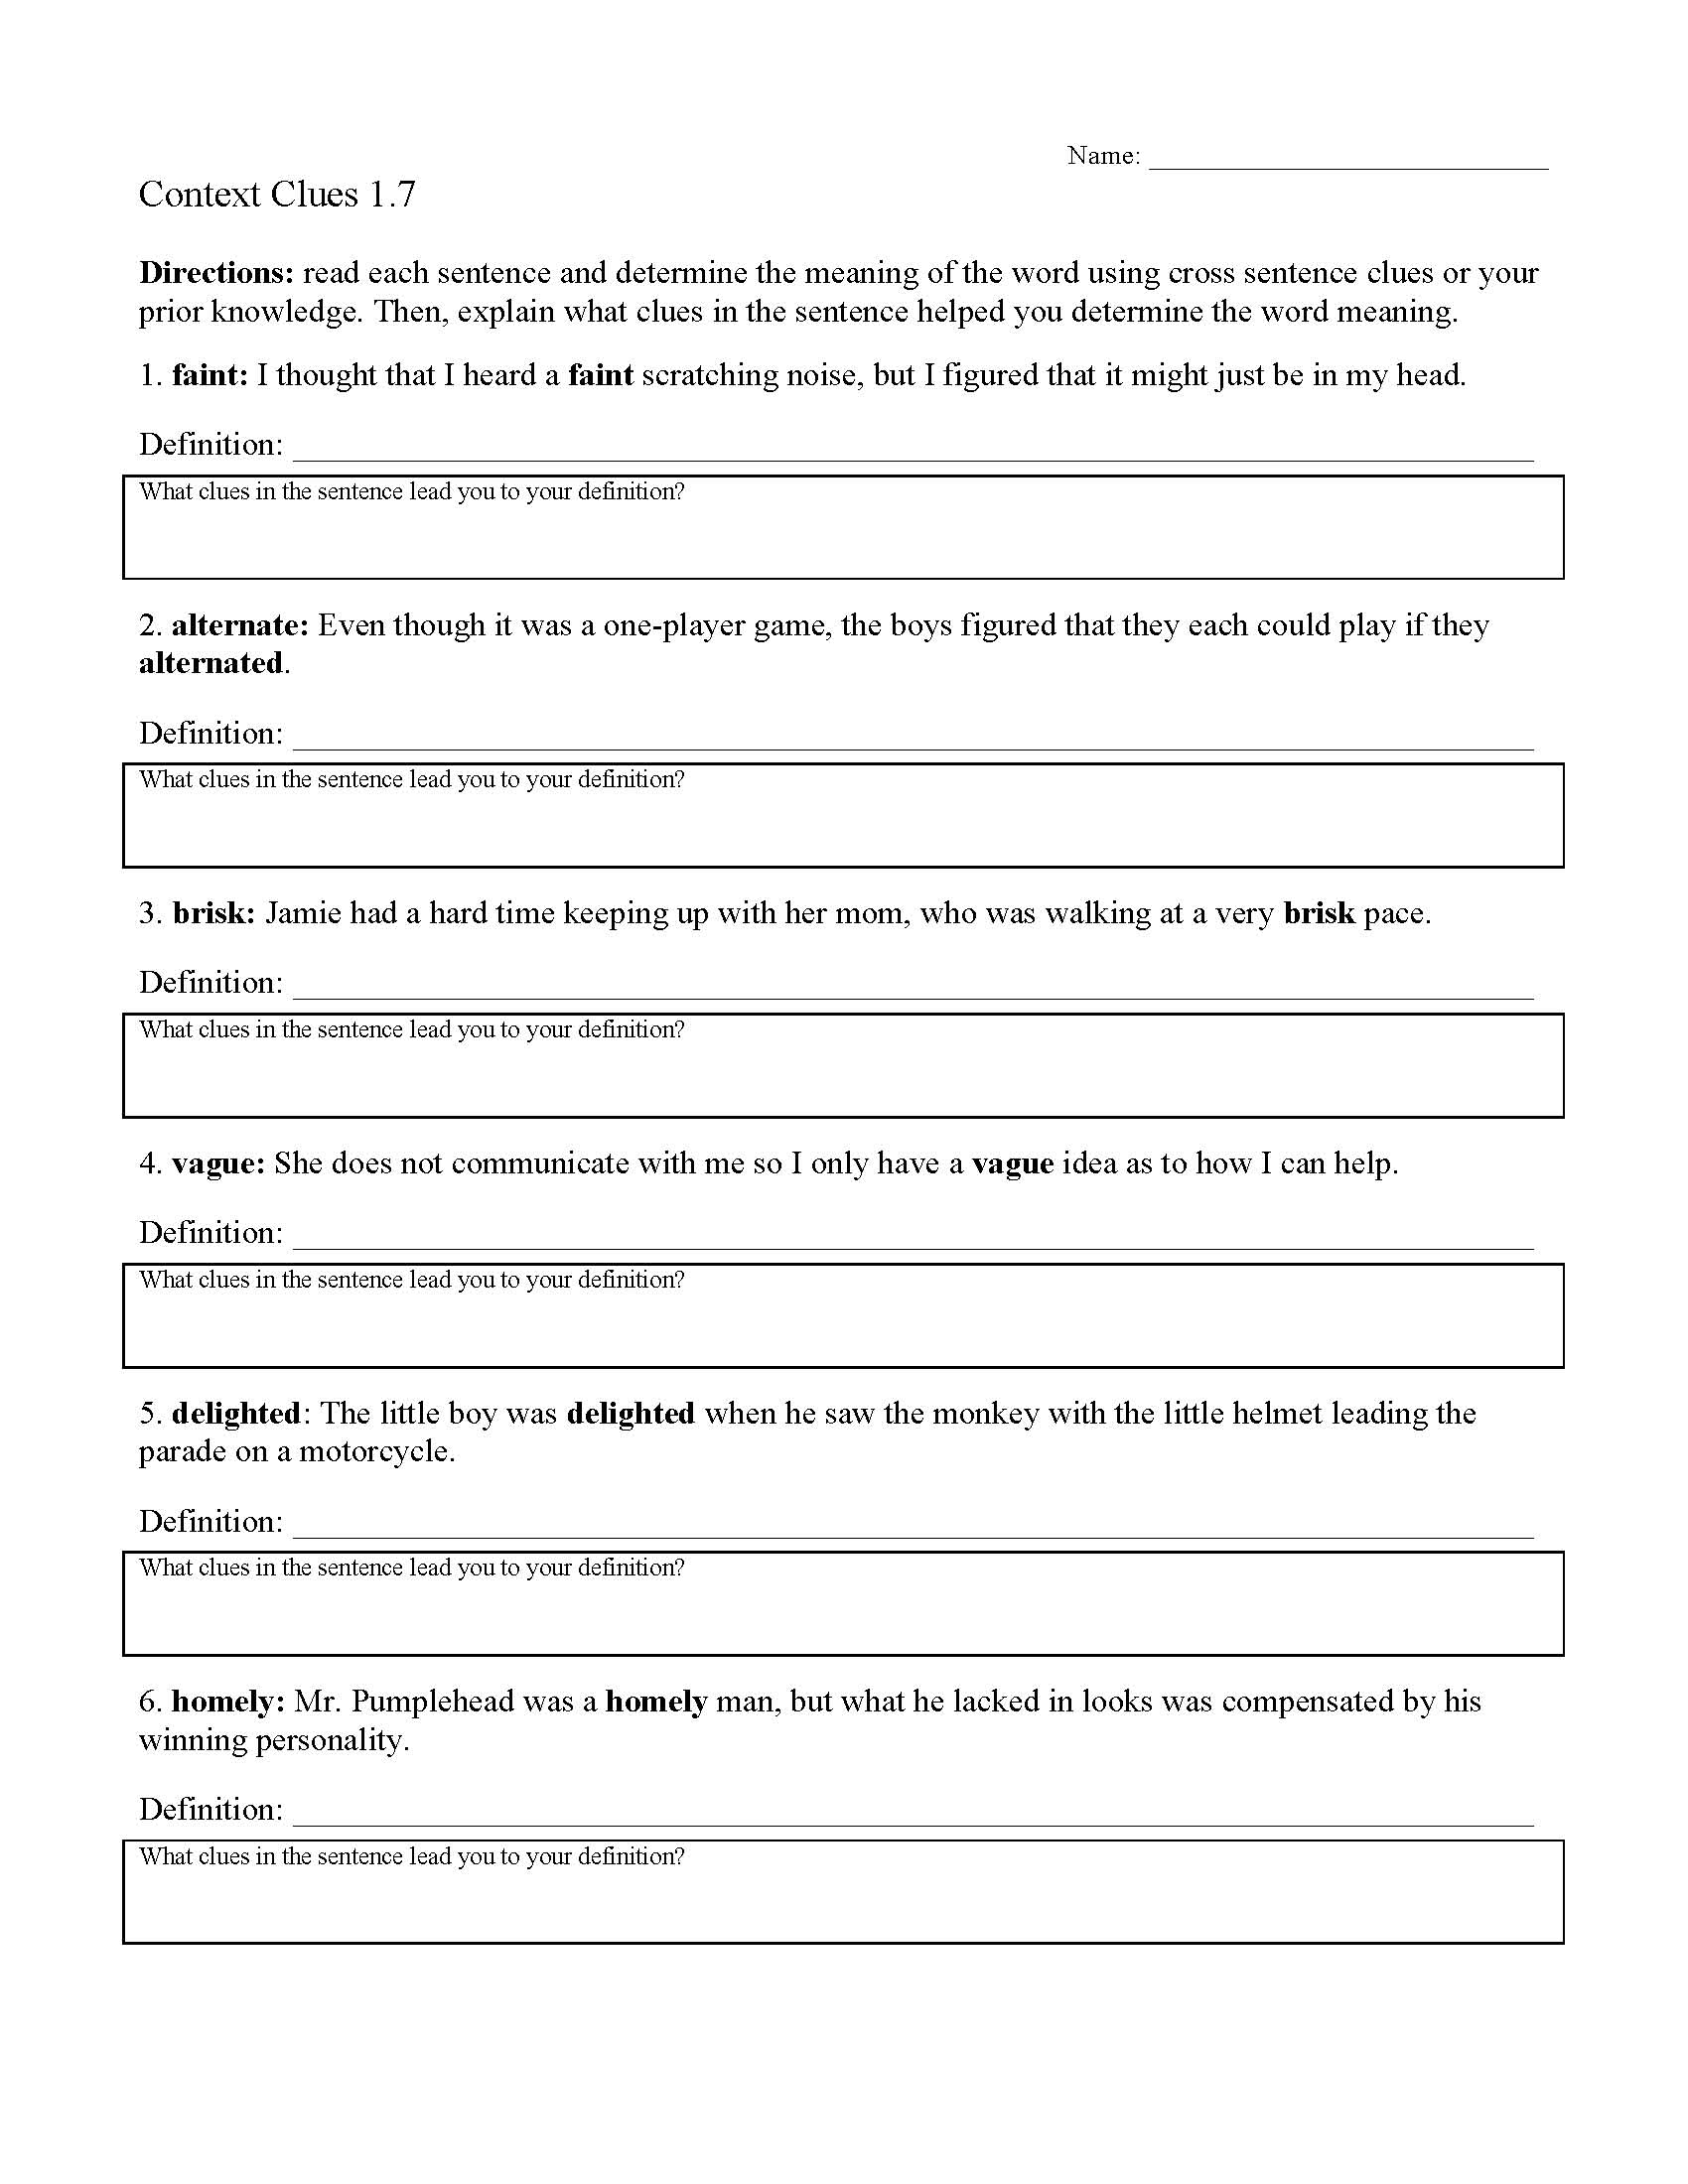 context-clues-worksheet-1-7-reading-activity